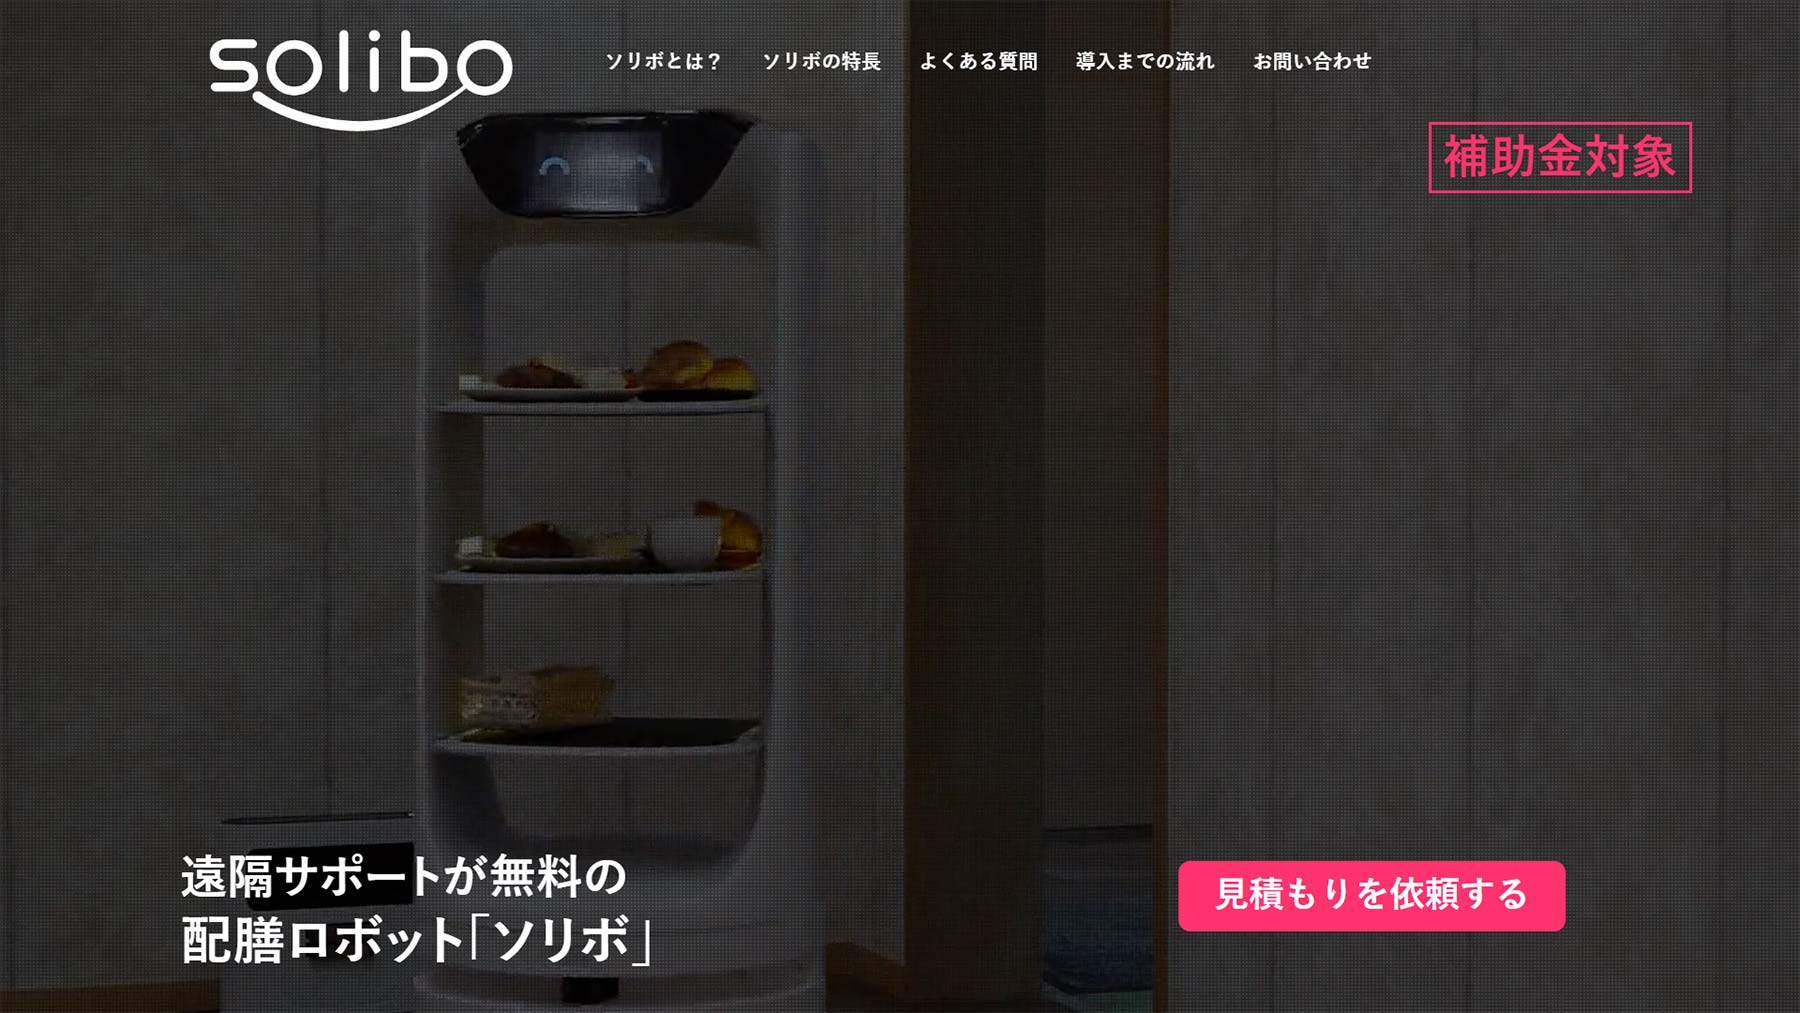 Solibo公式Webサイト